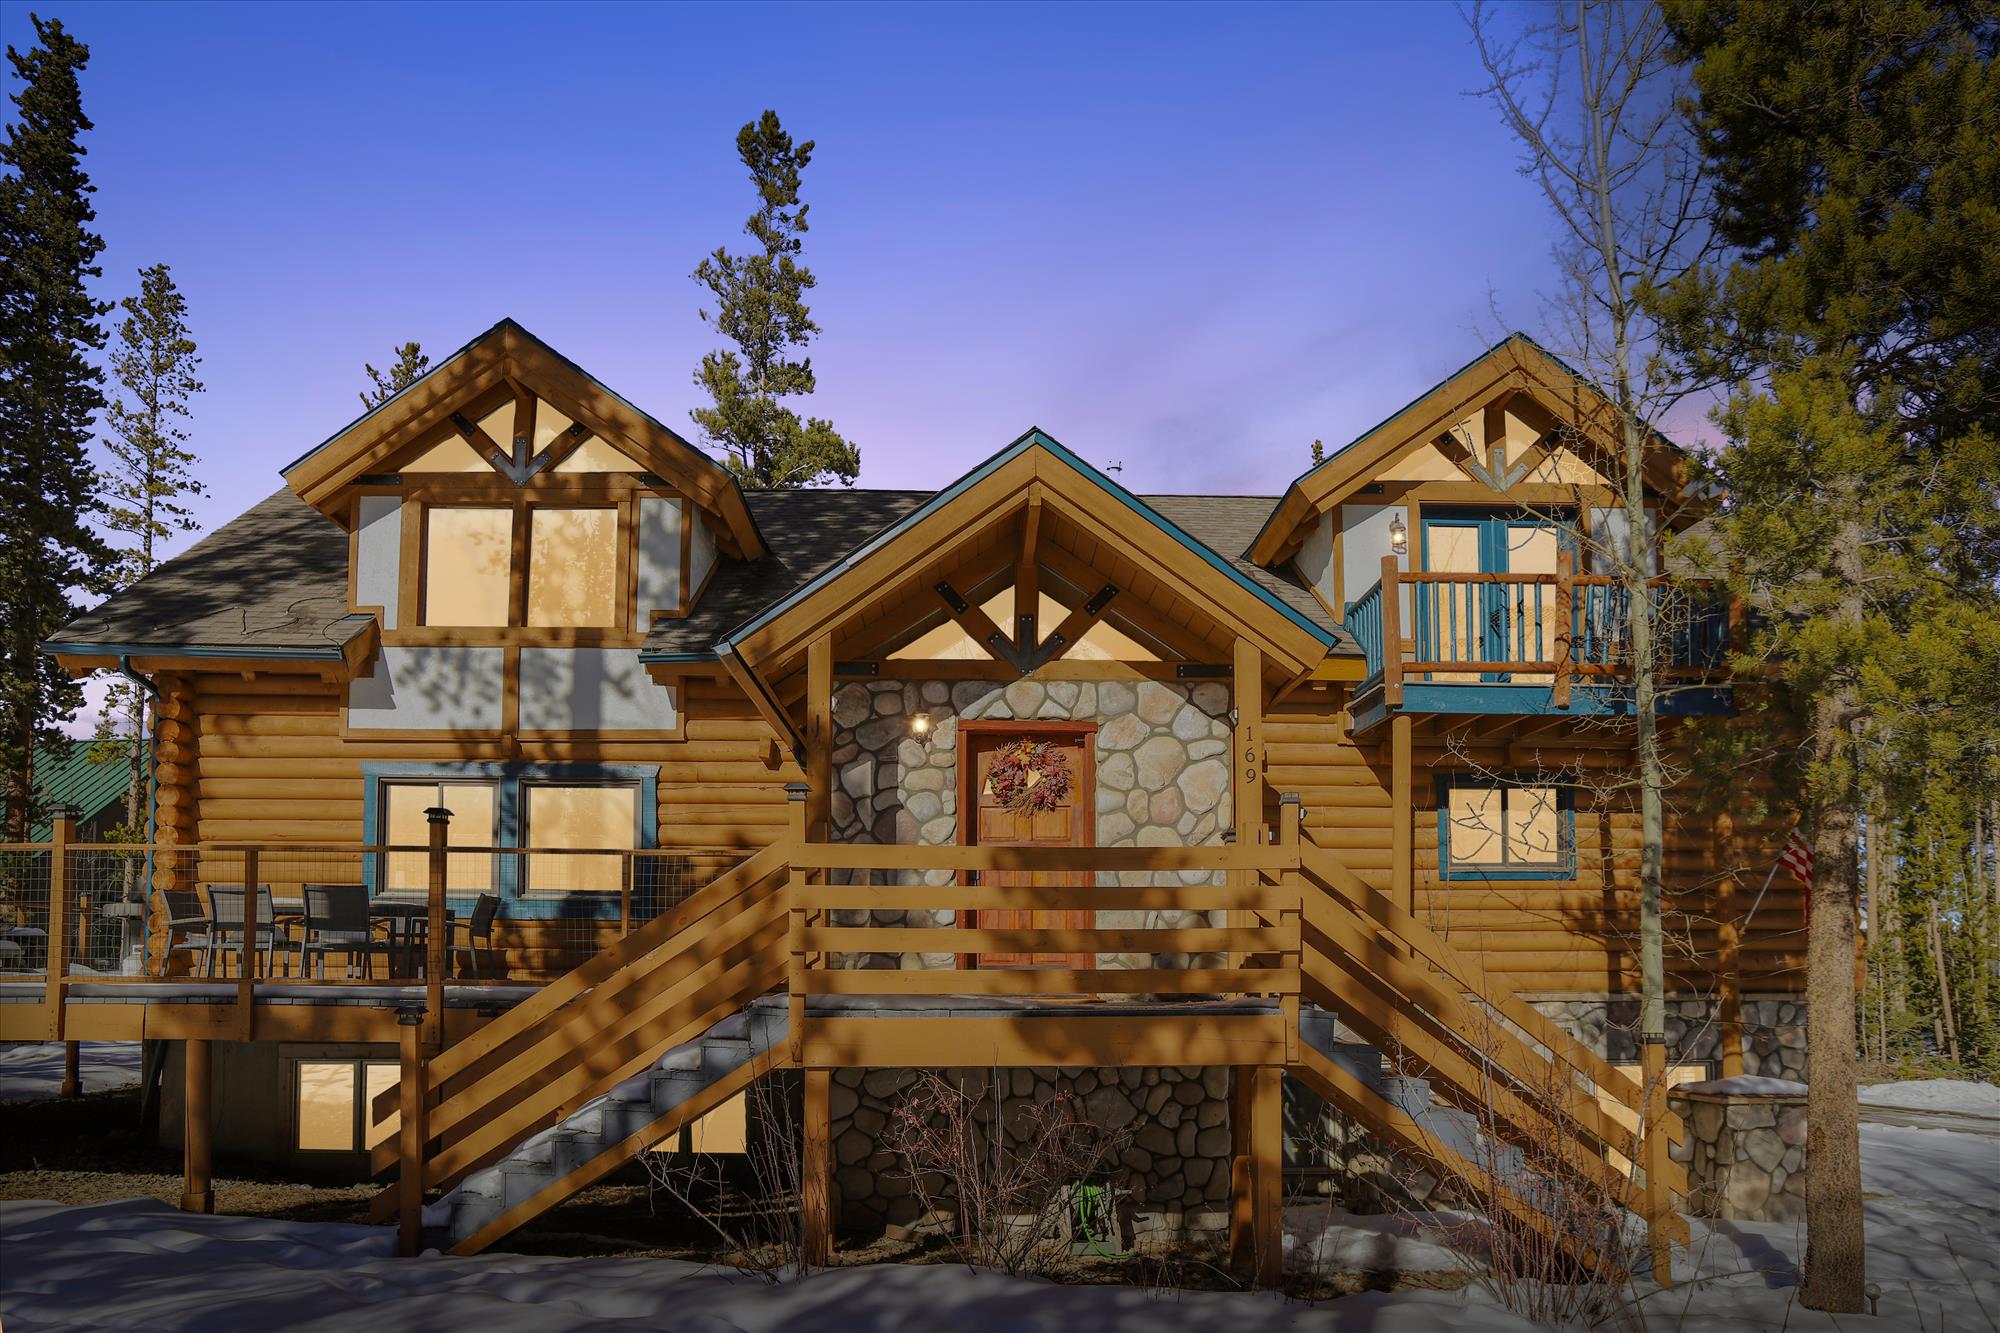 American Way rental house exterior -American Way Chalet Breckenridge Vacation Rental